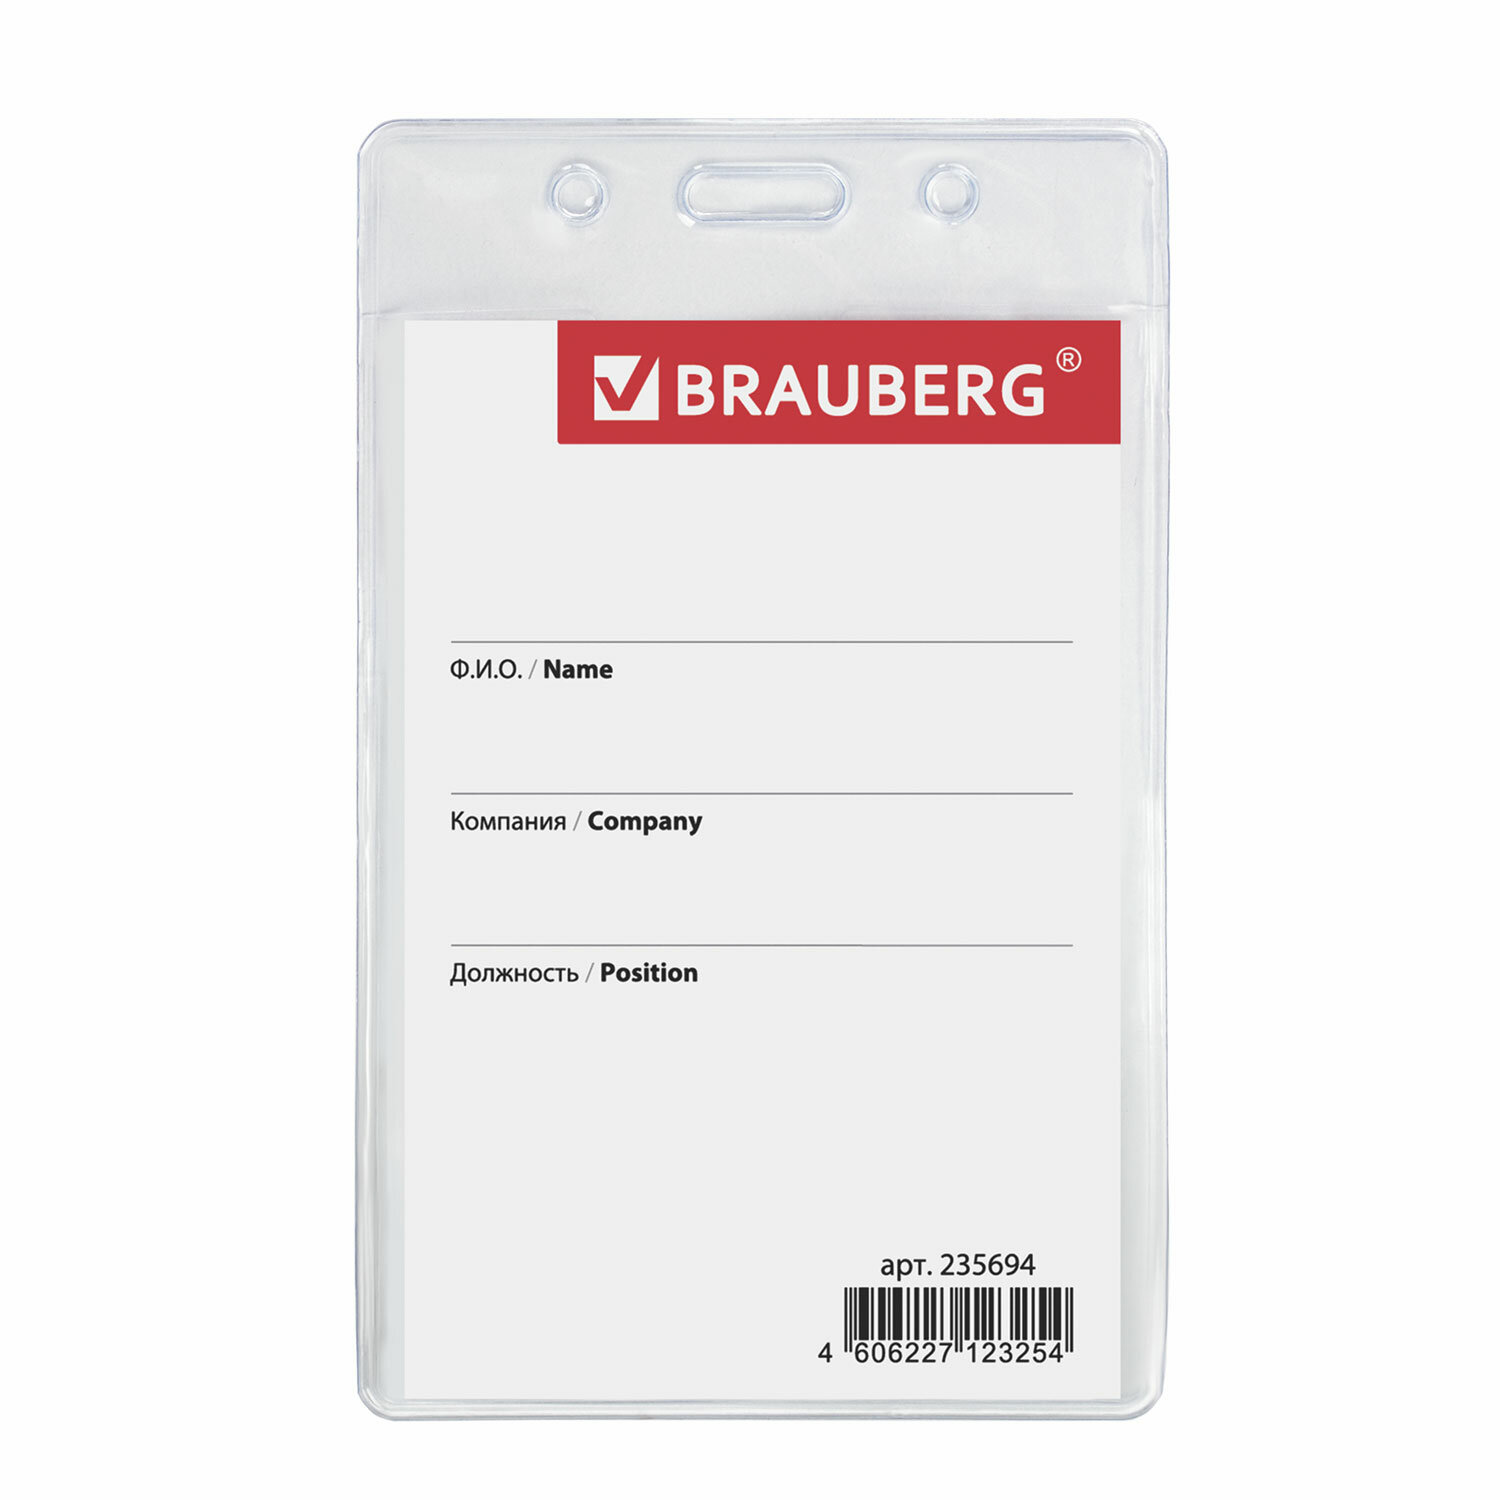 Brauberg - BRAUBERG 235694